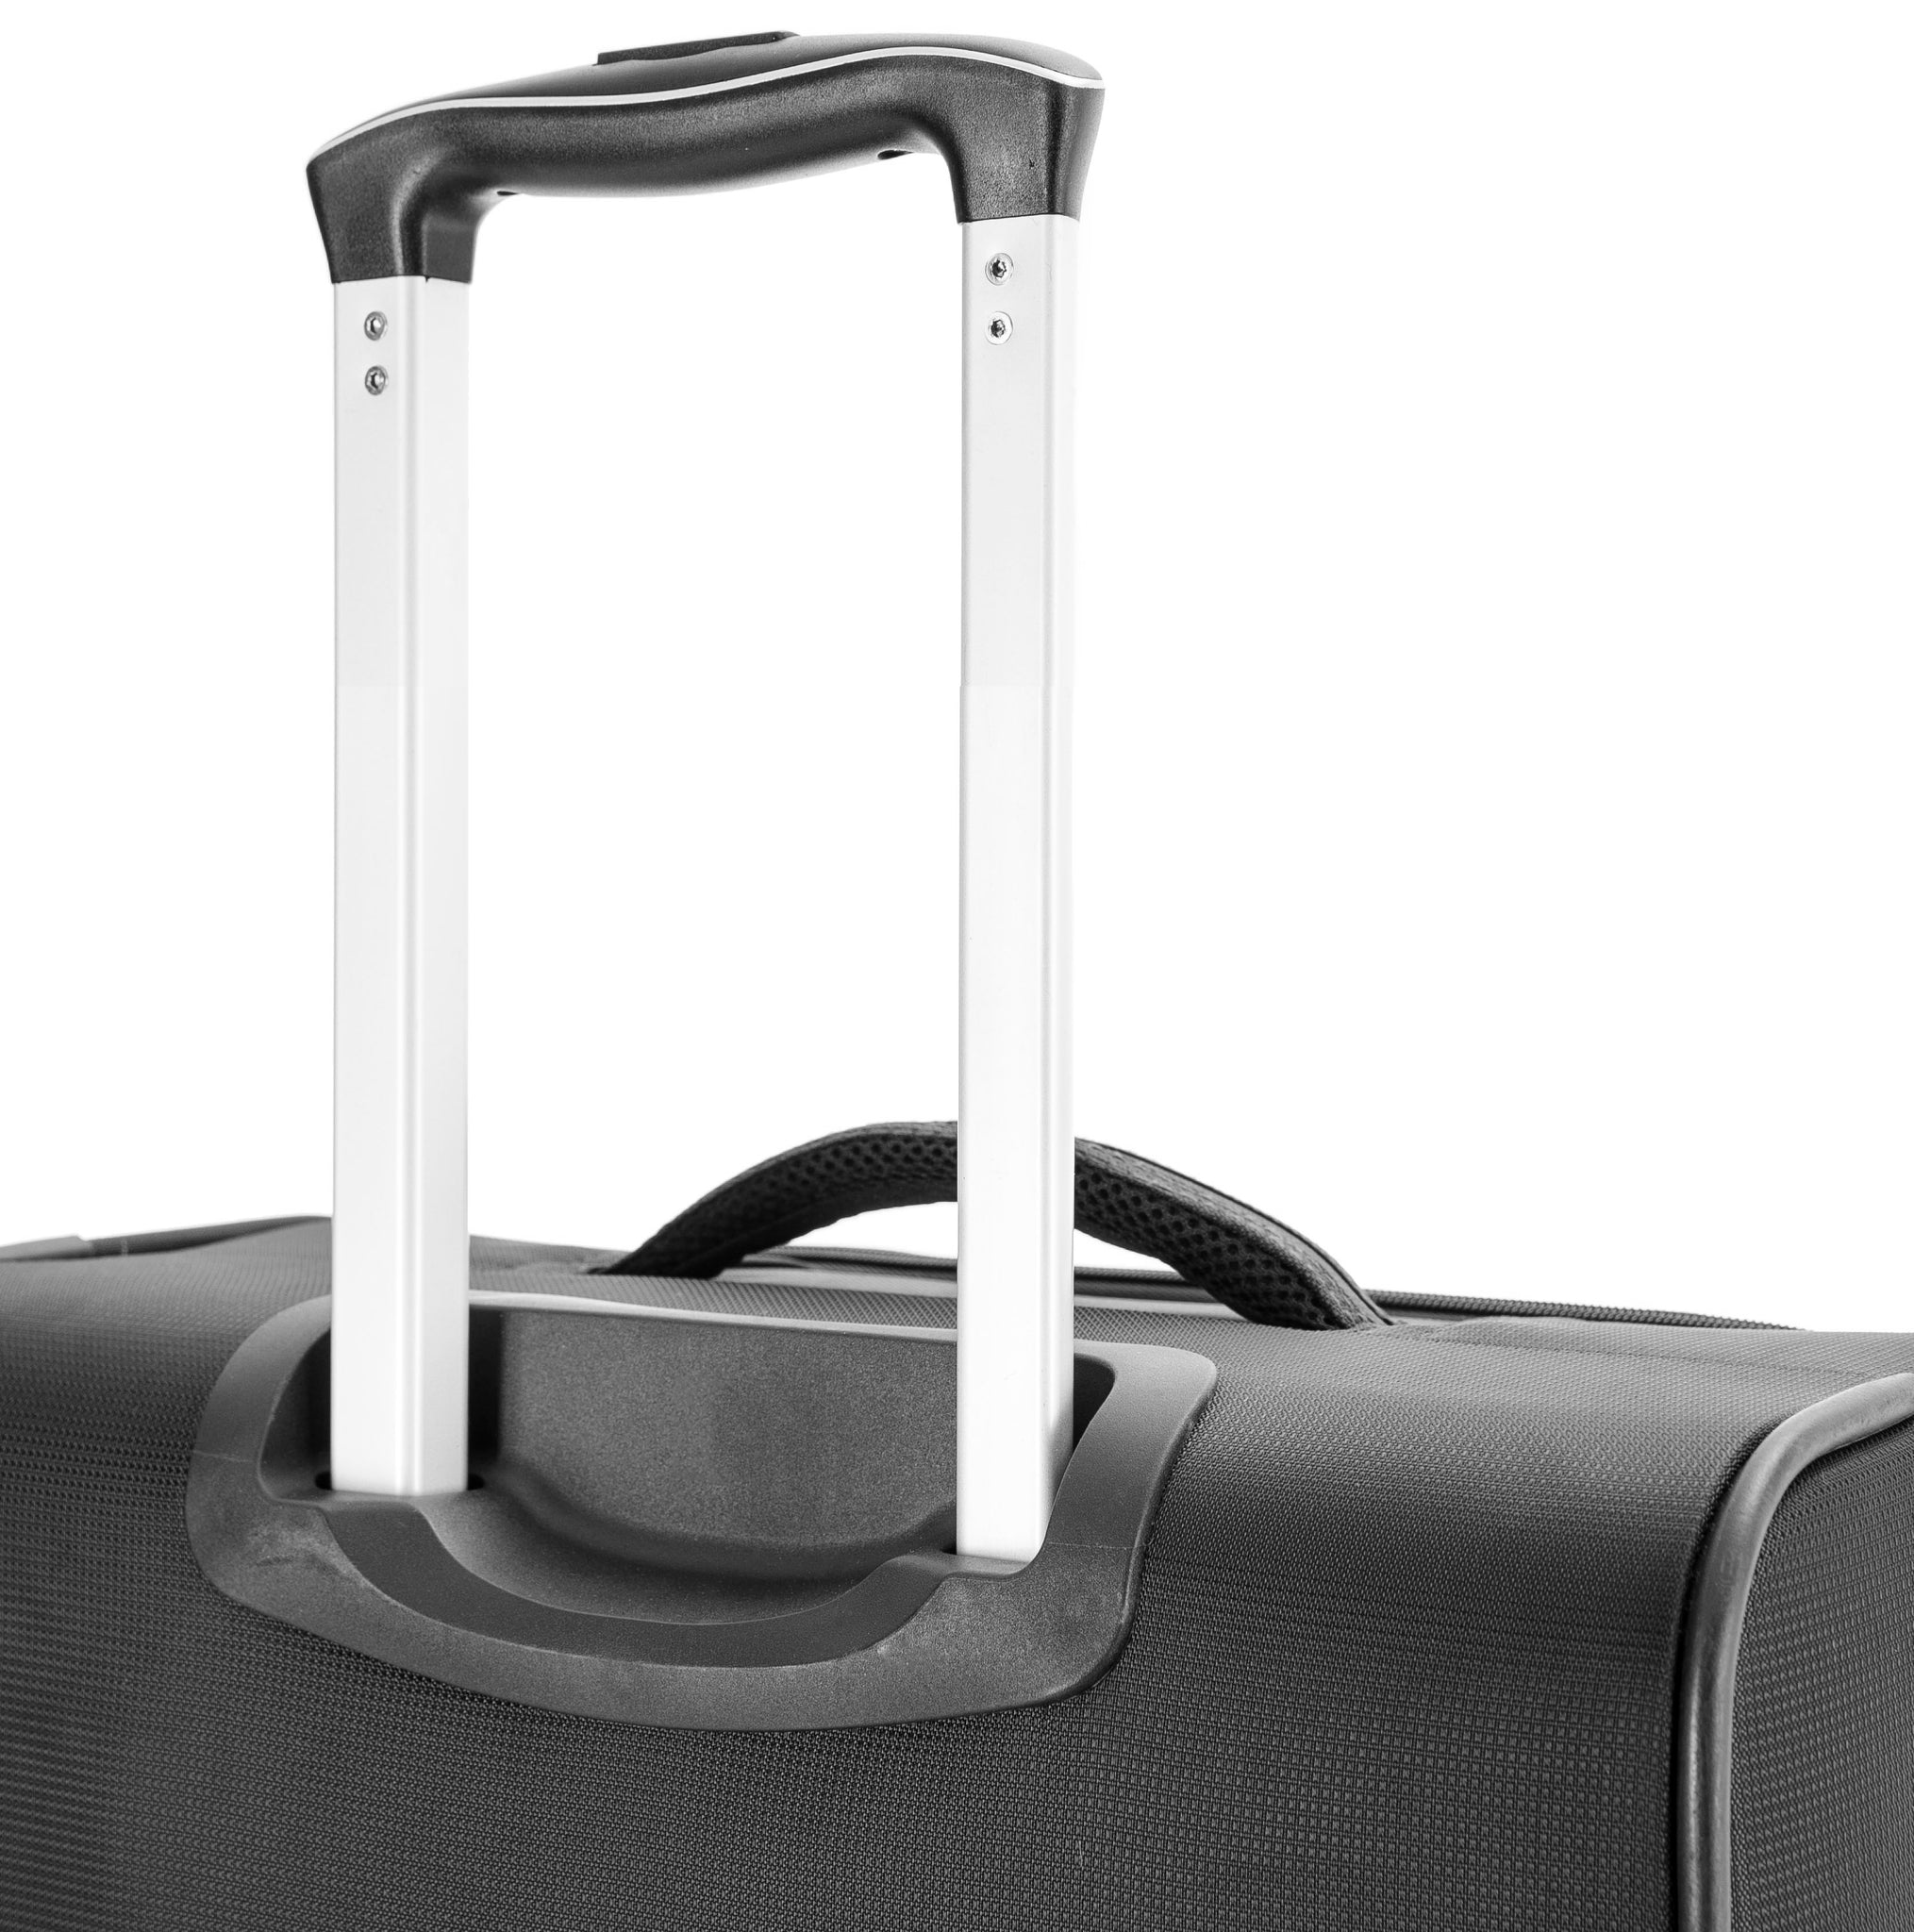 Special offer Brand New 4 Wheel Ultra Lightweight Suitcase – DK